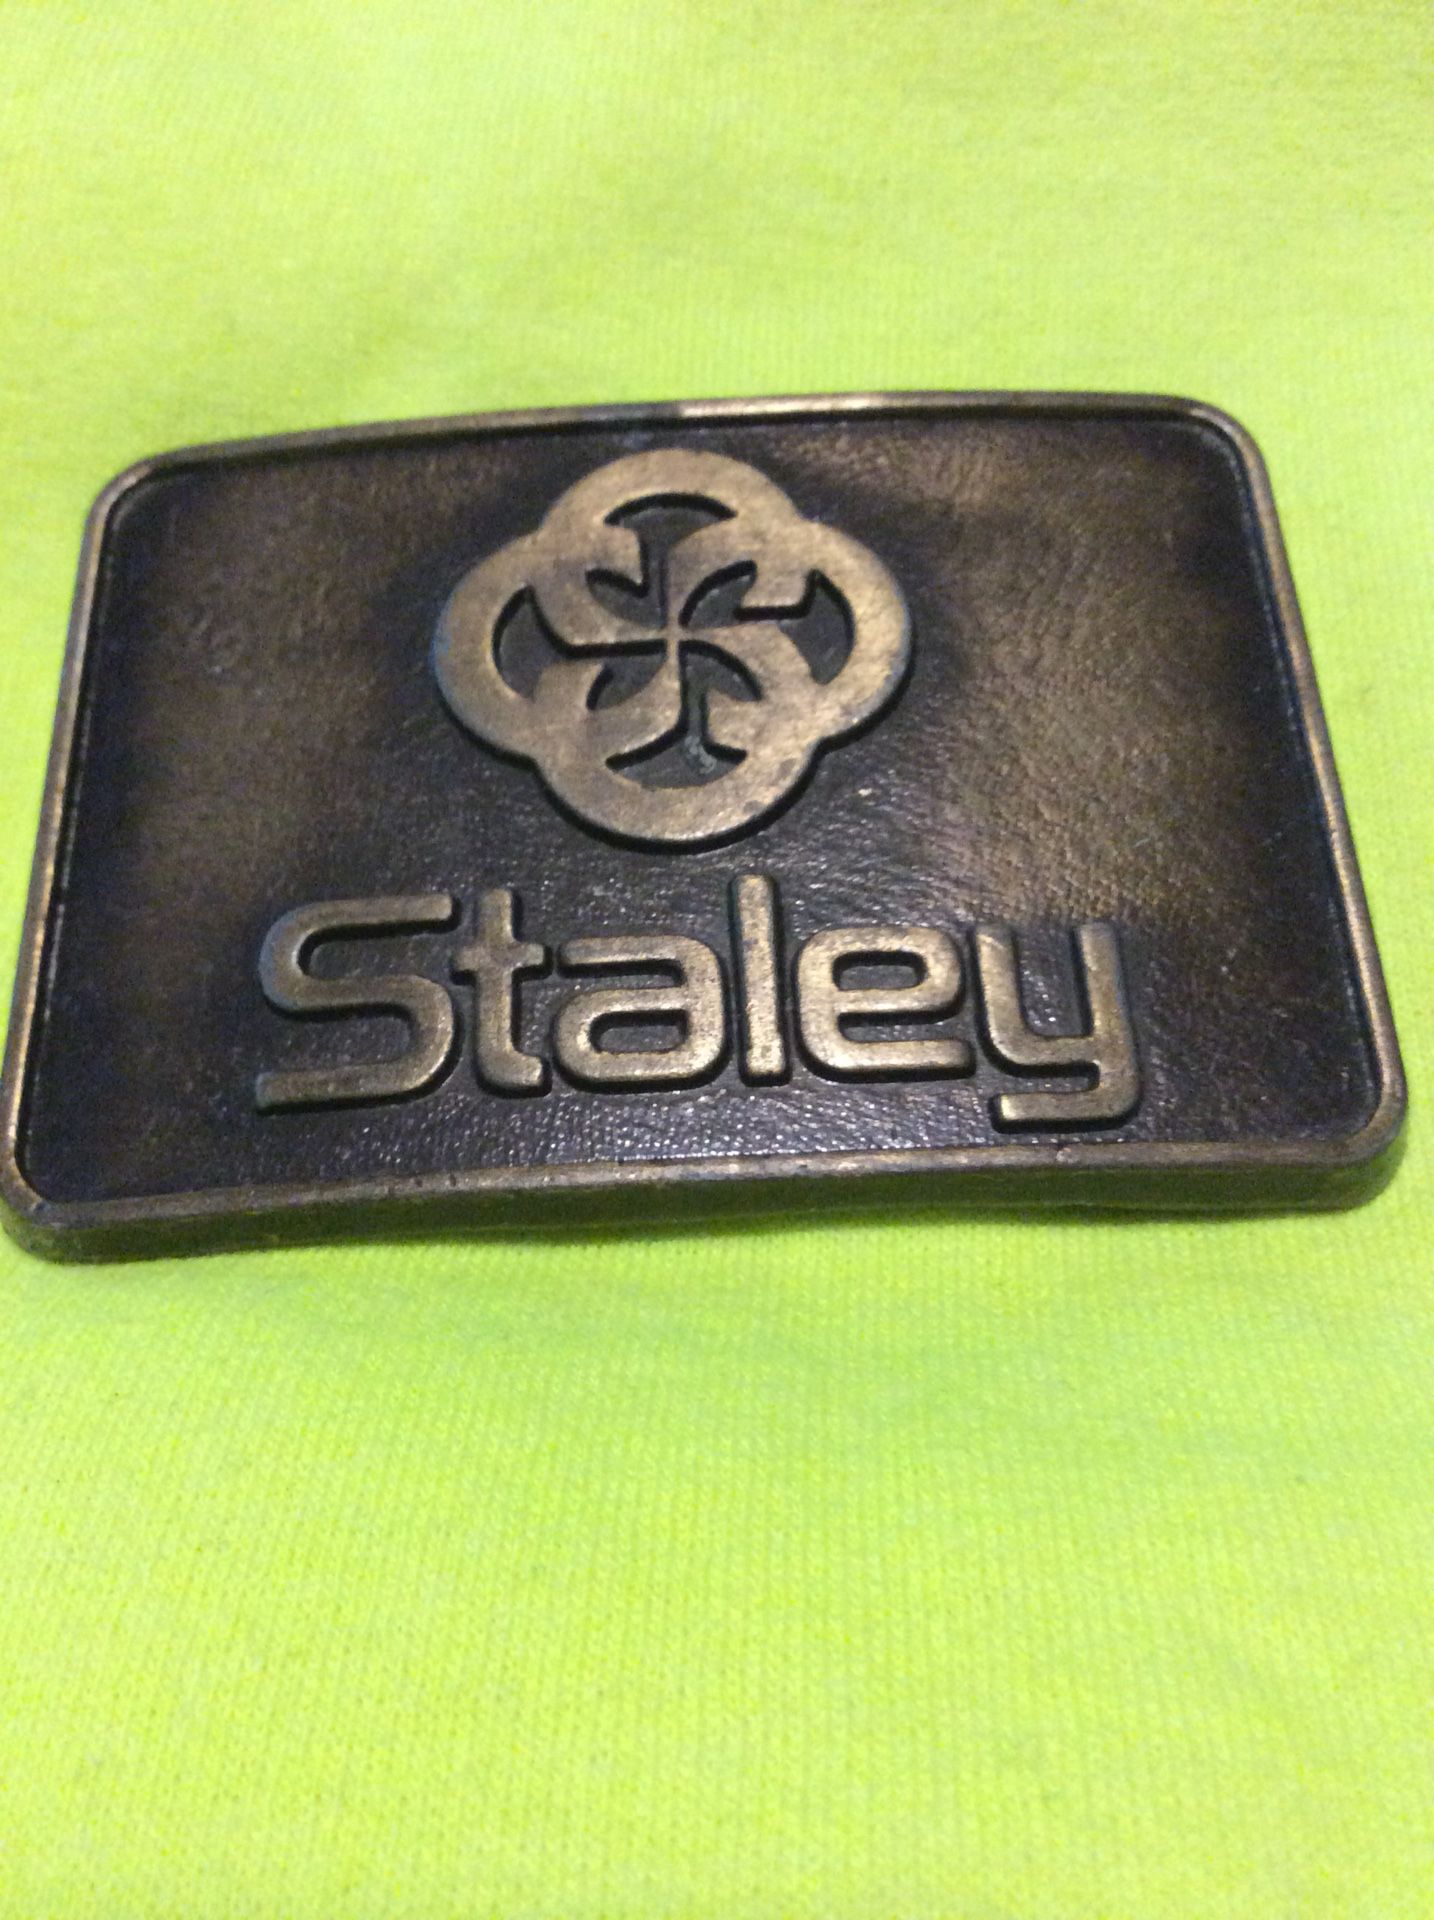 Original ( Staley ) belt buckle